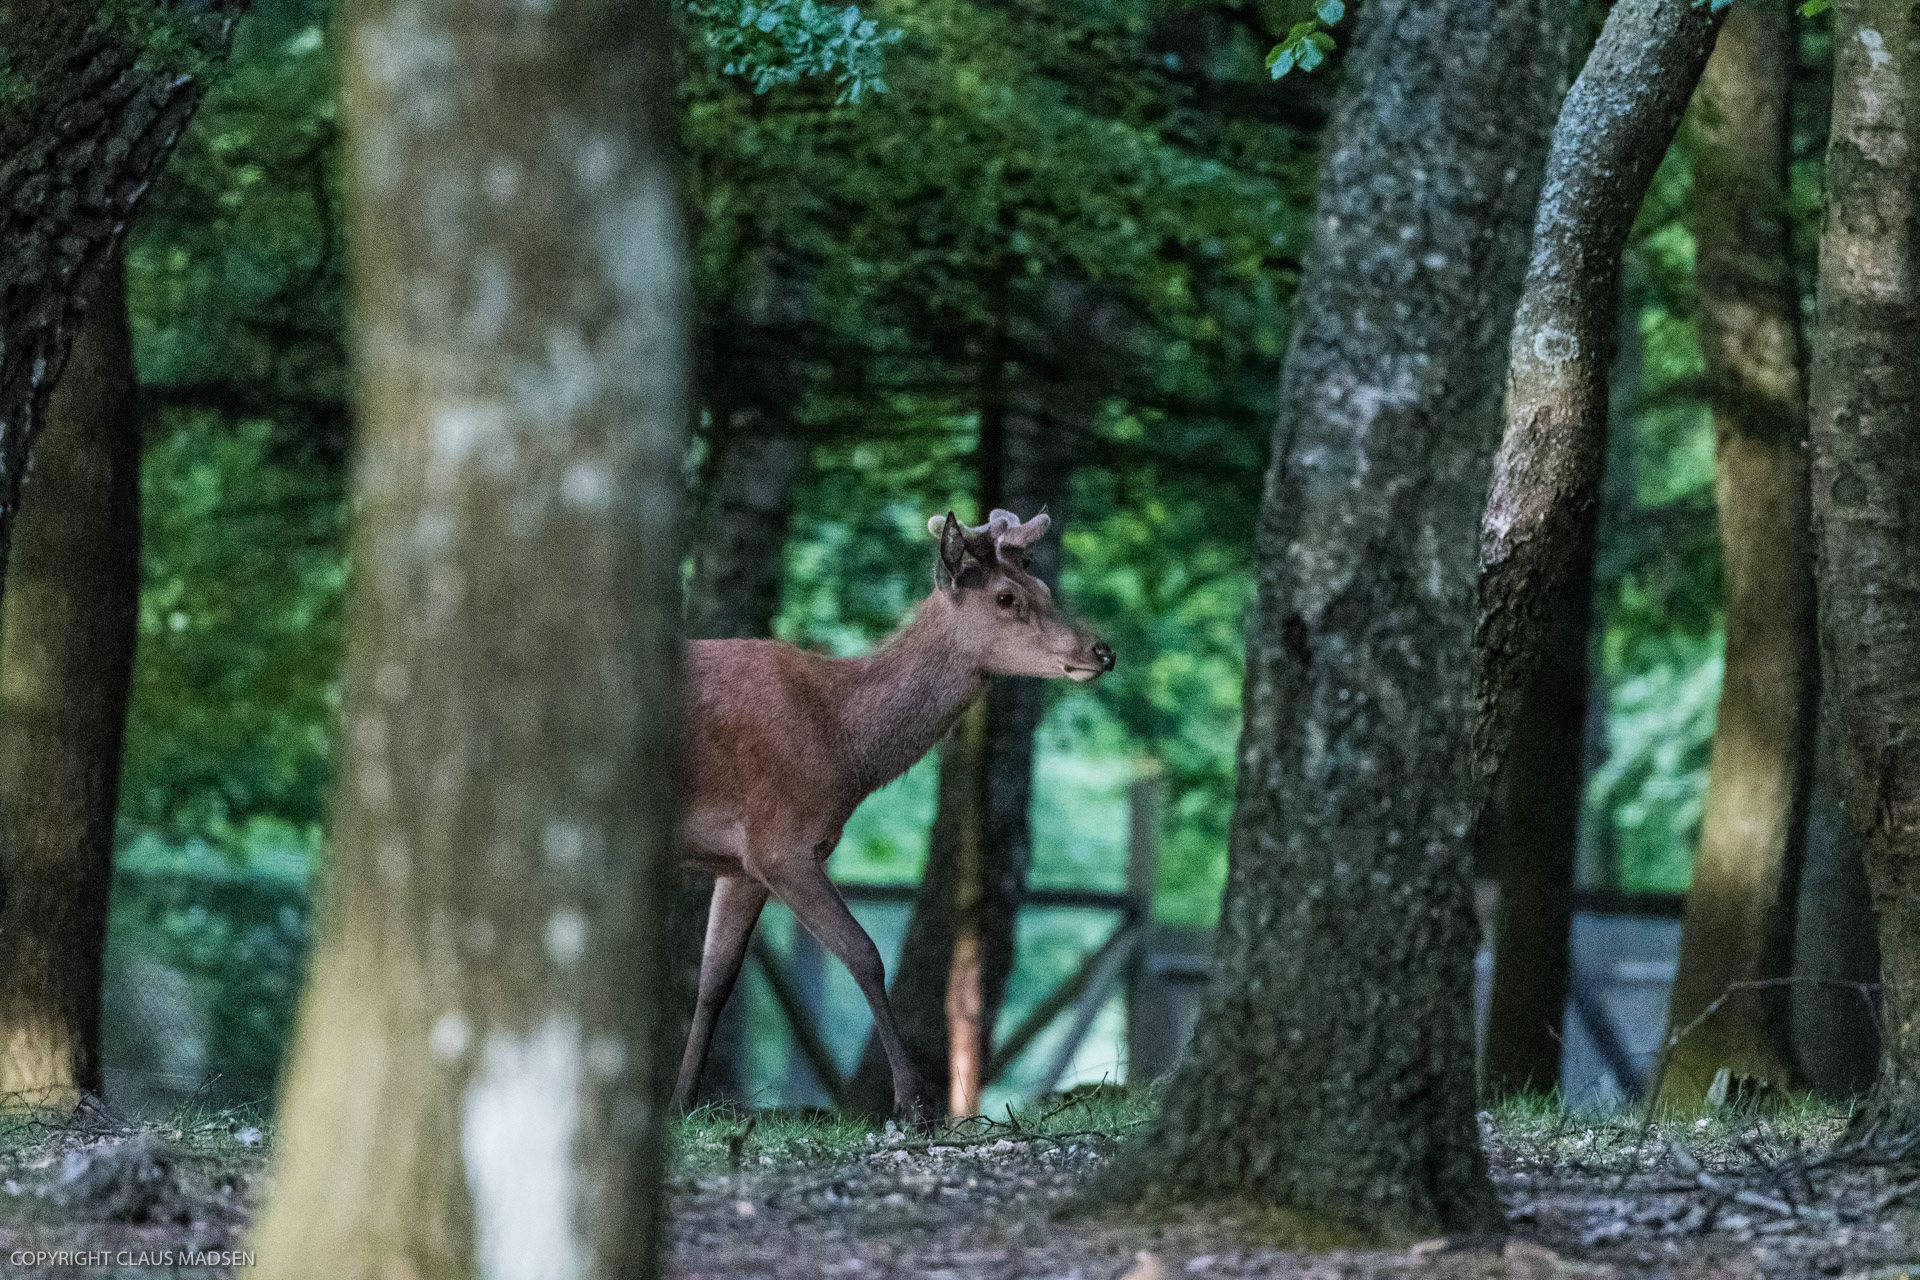 Esbjerg_2019_5_Deer Park_19